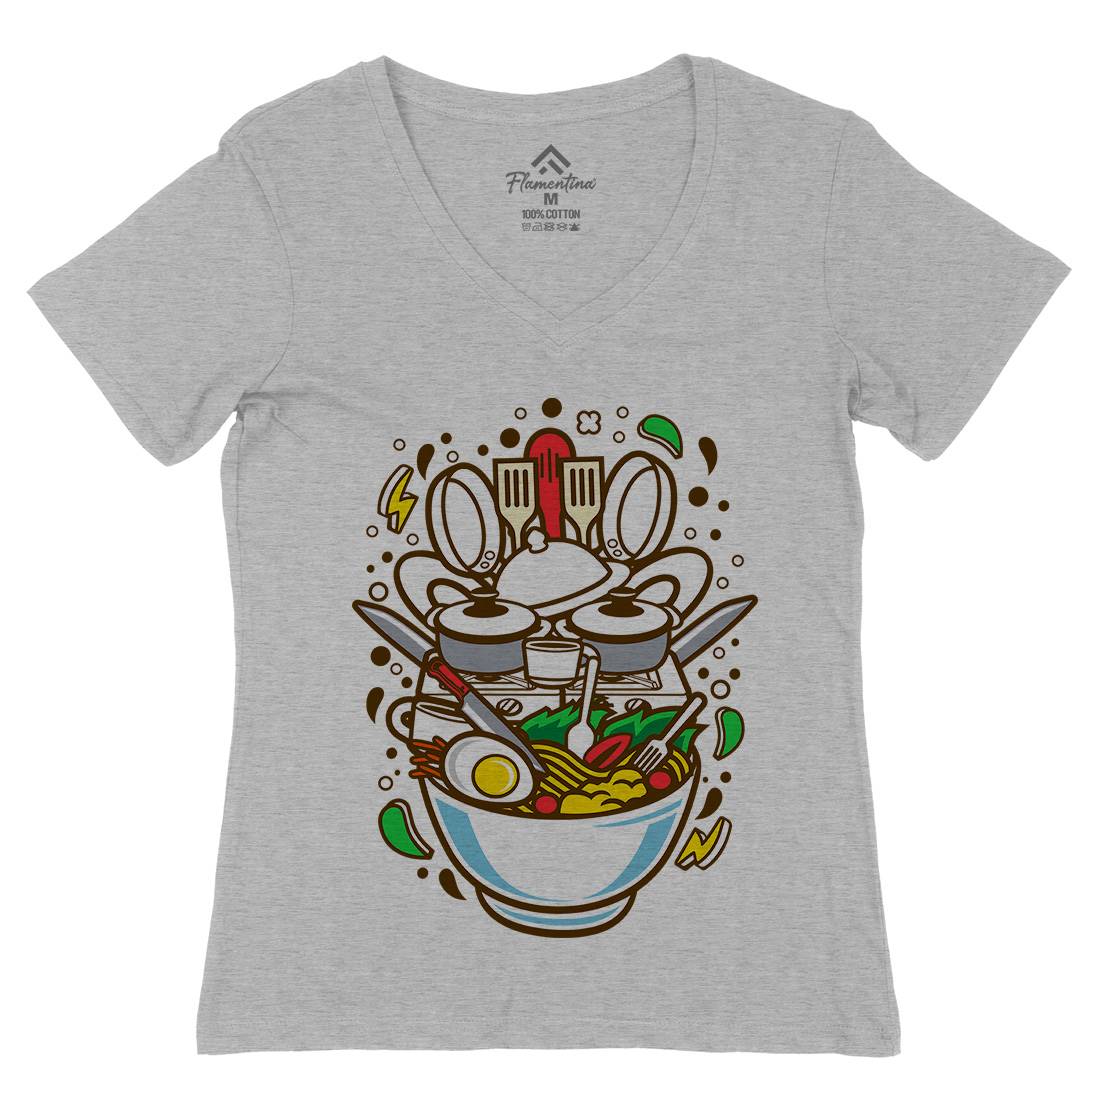 Cooking Ramen Womens Organic V-Neck T-Shirt Food C526